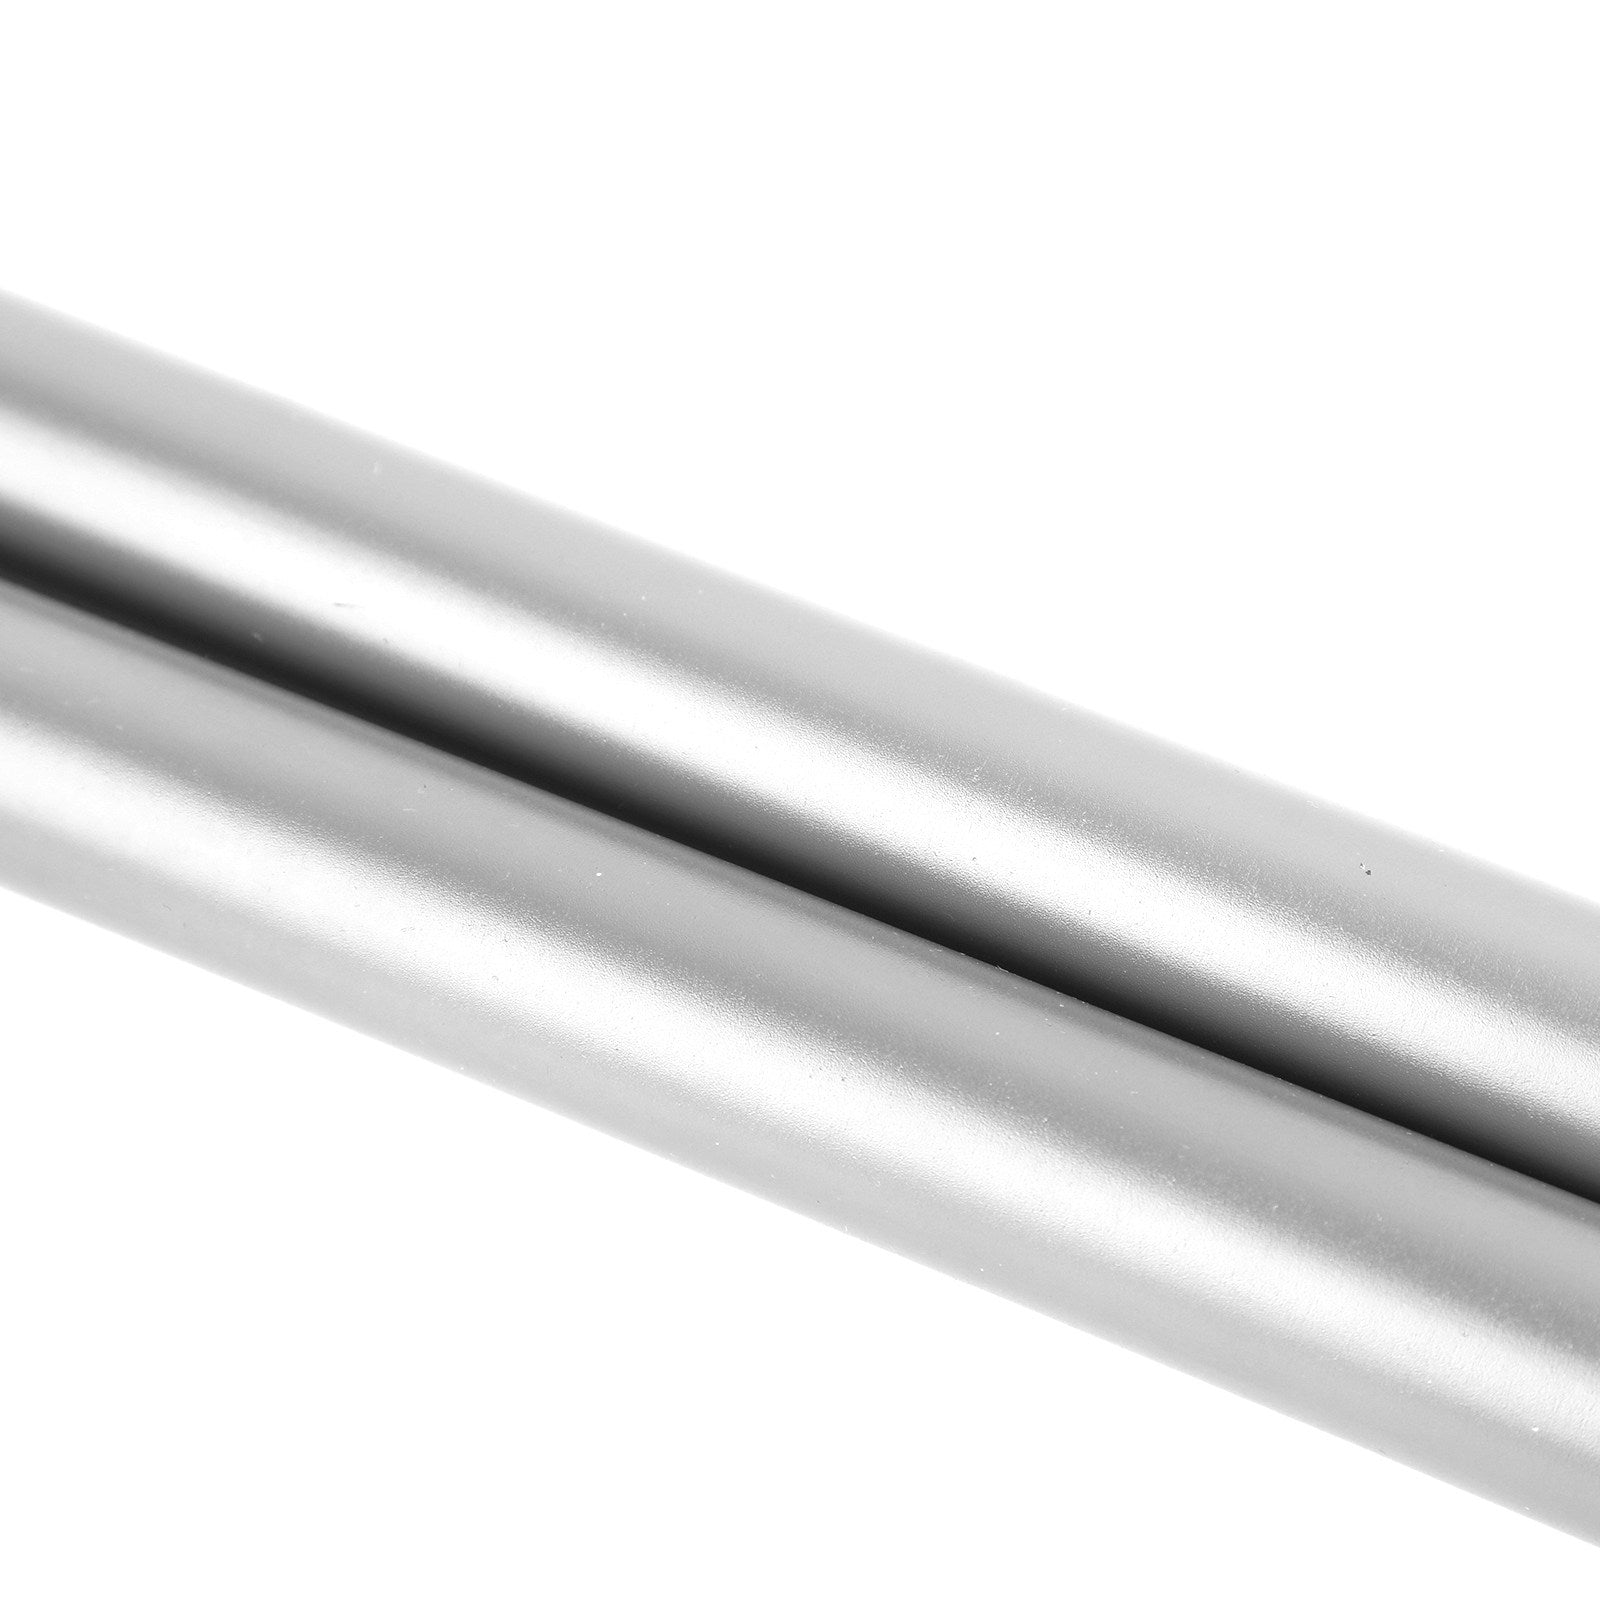 Kit manubrio tubo forcella universale regolabile girevole in billet CNC 47mm argento generico